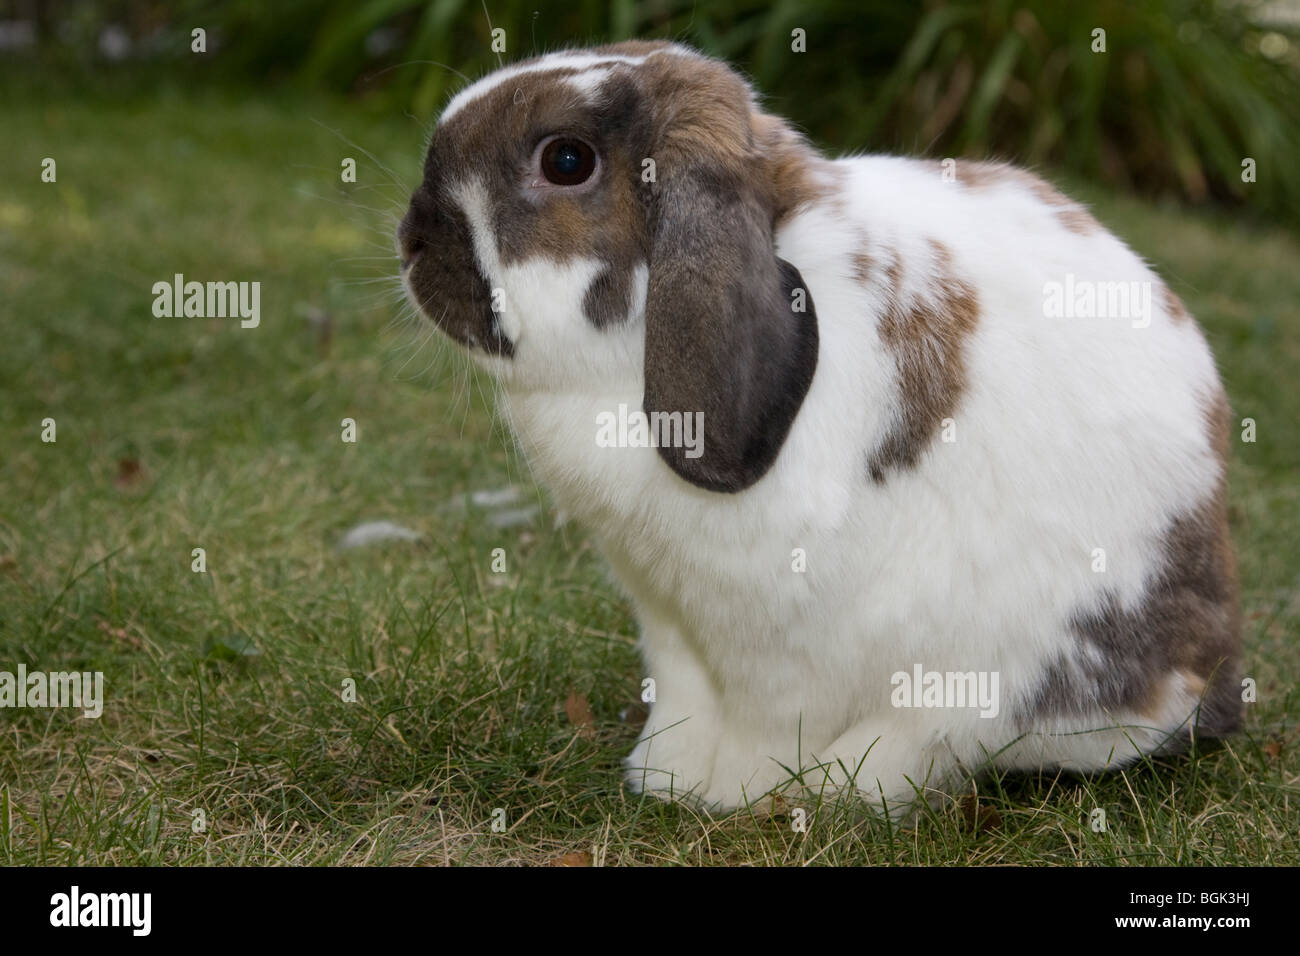 Holland Lop pet dwarf rabbit outdoors on green grass in summer Stock Photo